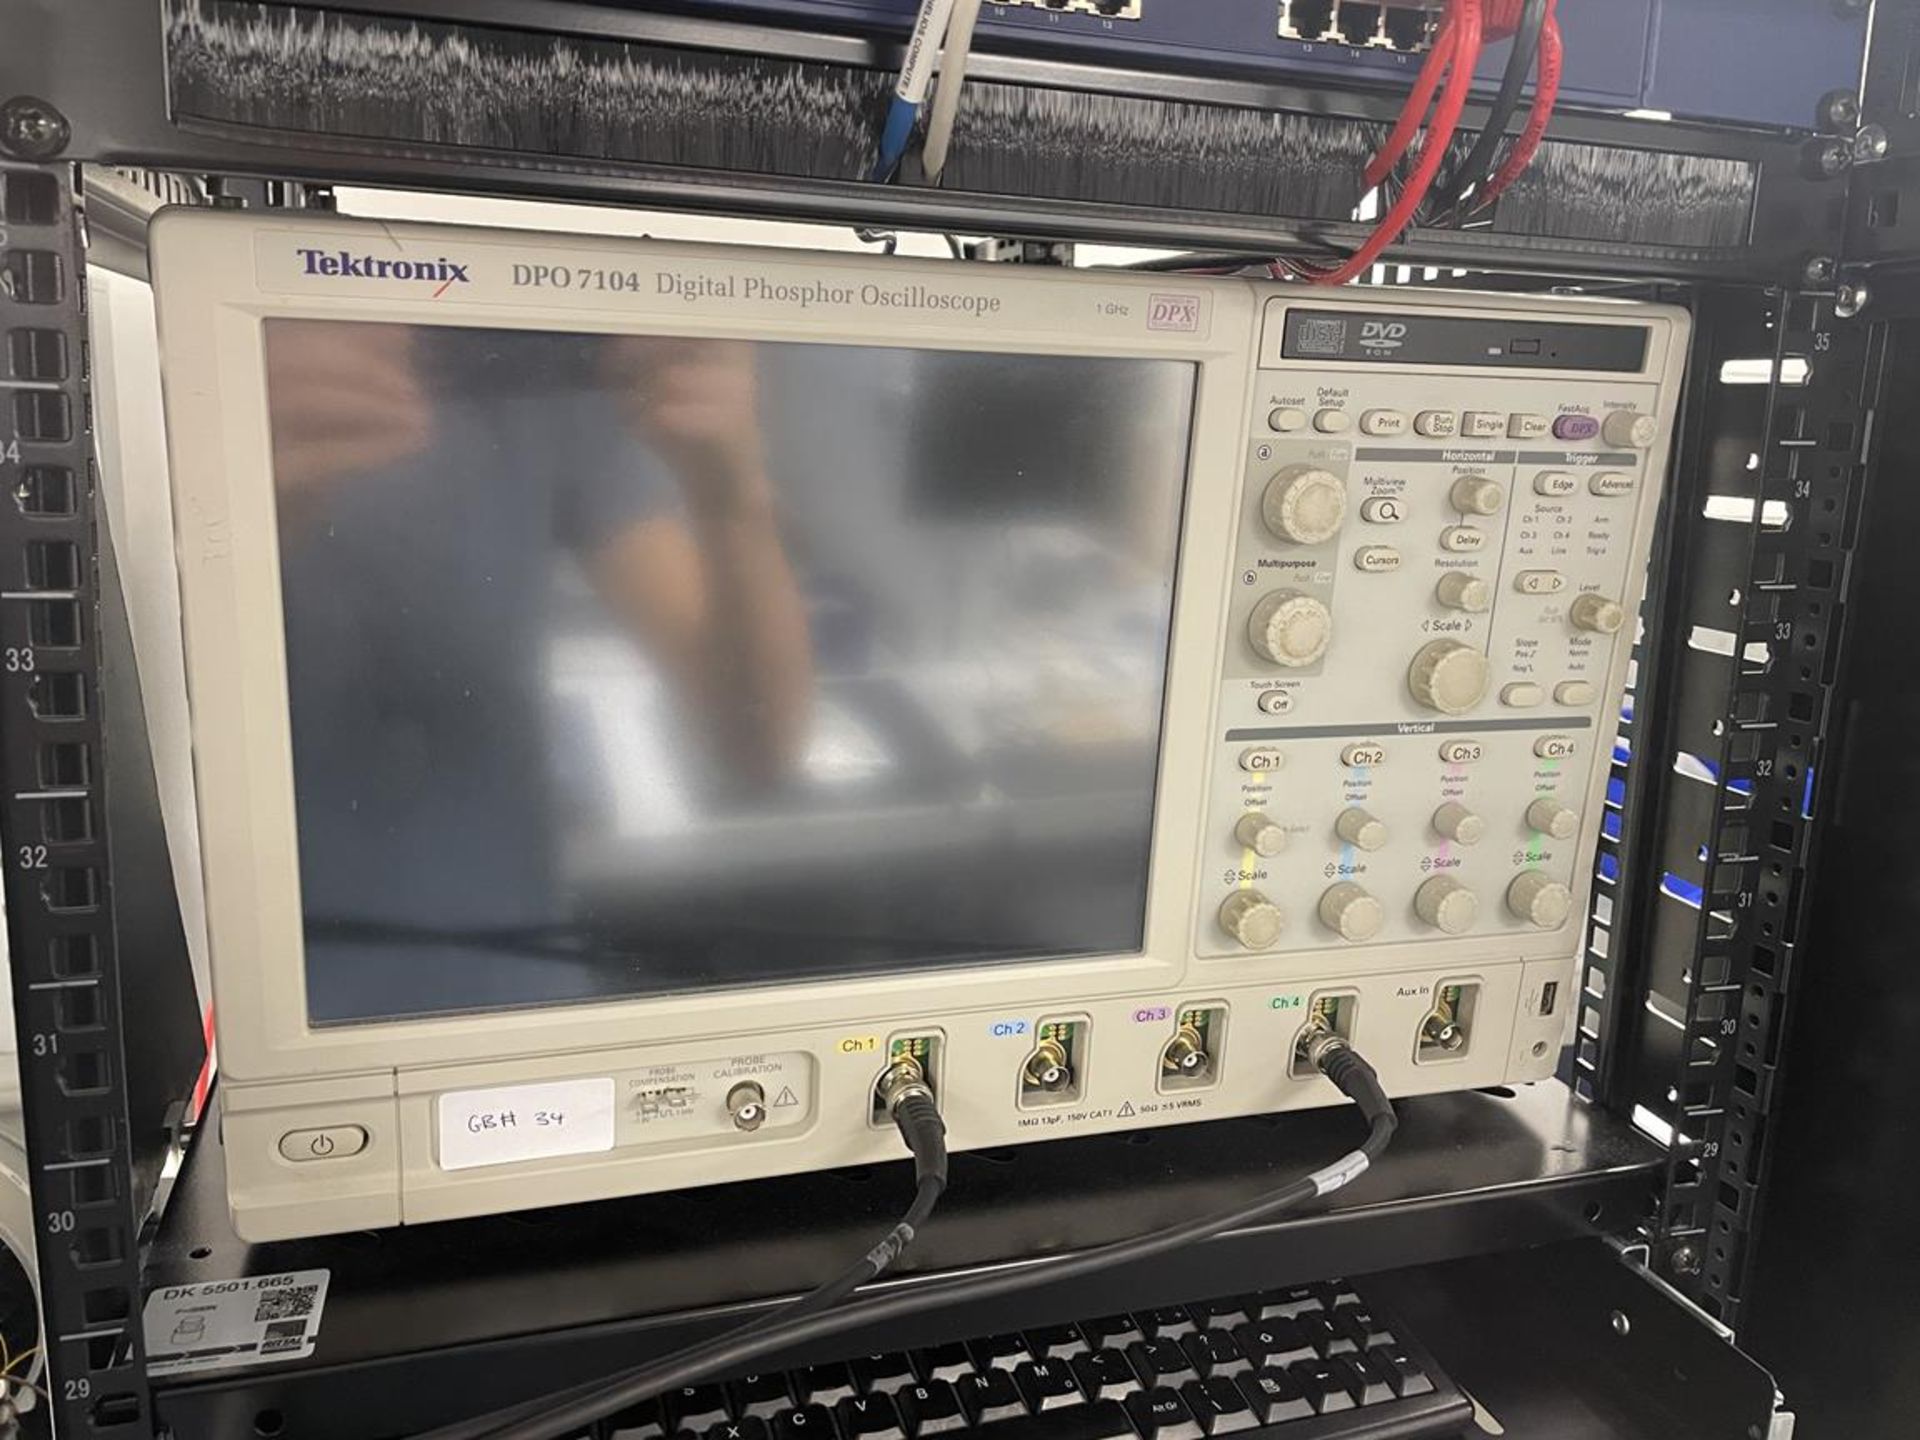 Tektronix DPO 7104 Digital Phosphor Oscilloscope 1GHz (GB REF#34)